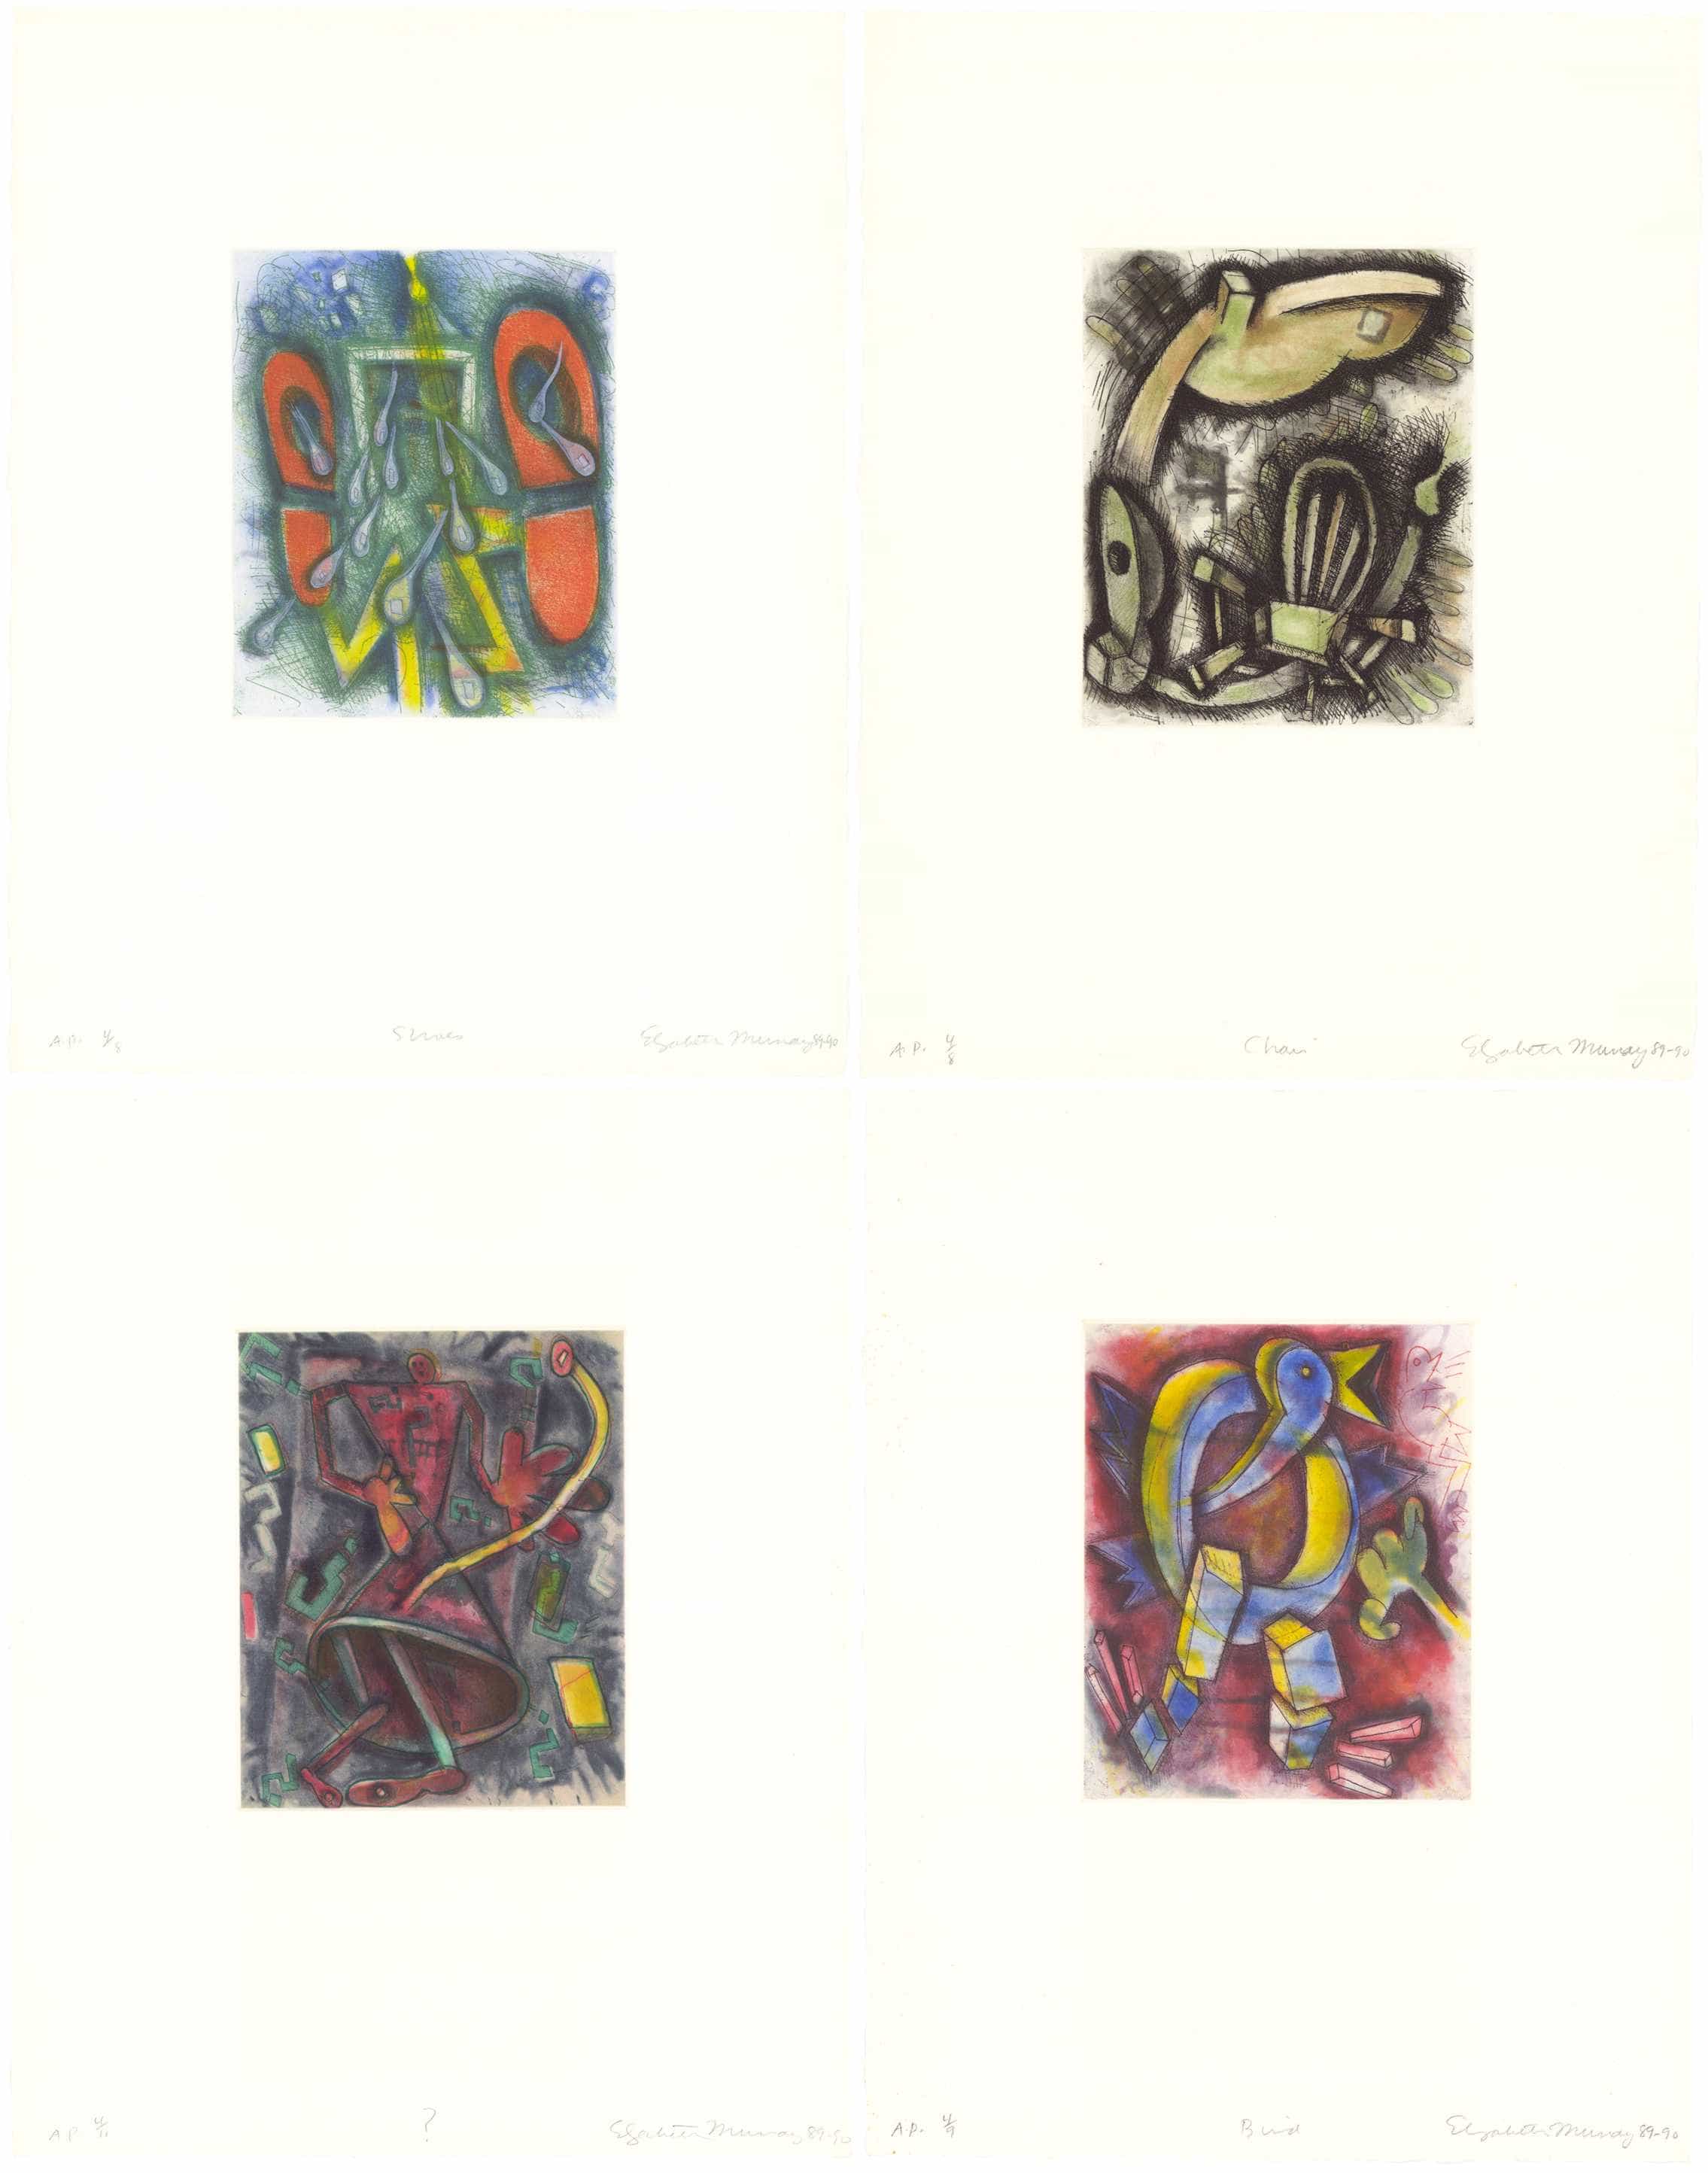 Elizabeth Murray, Quartet, 1989-90